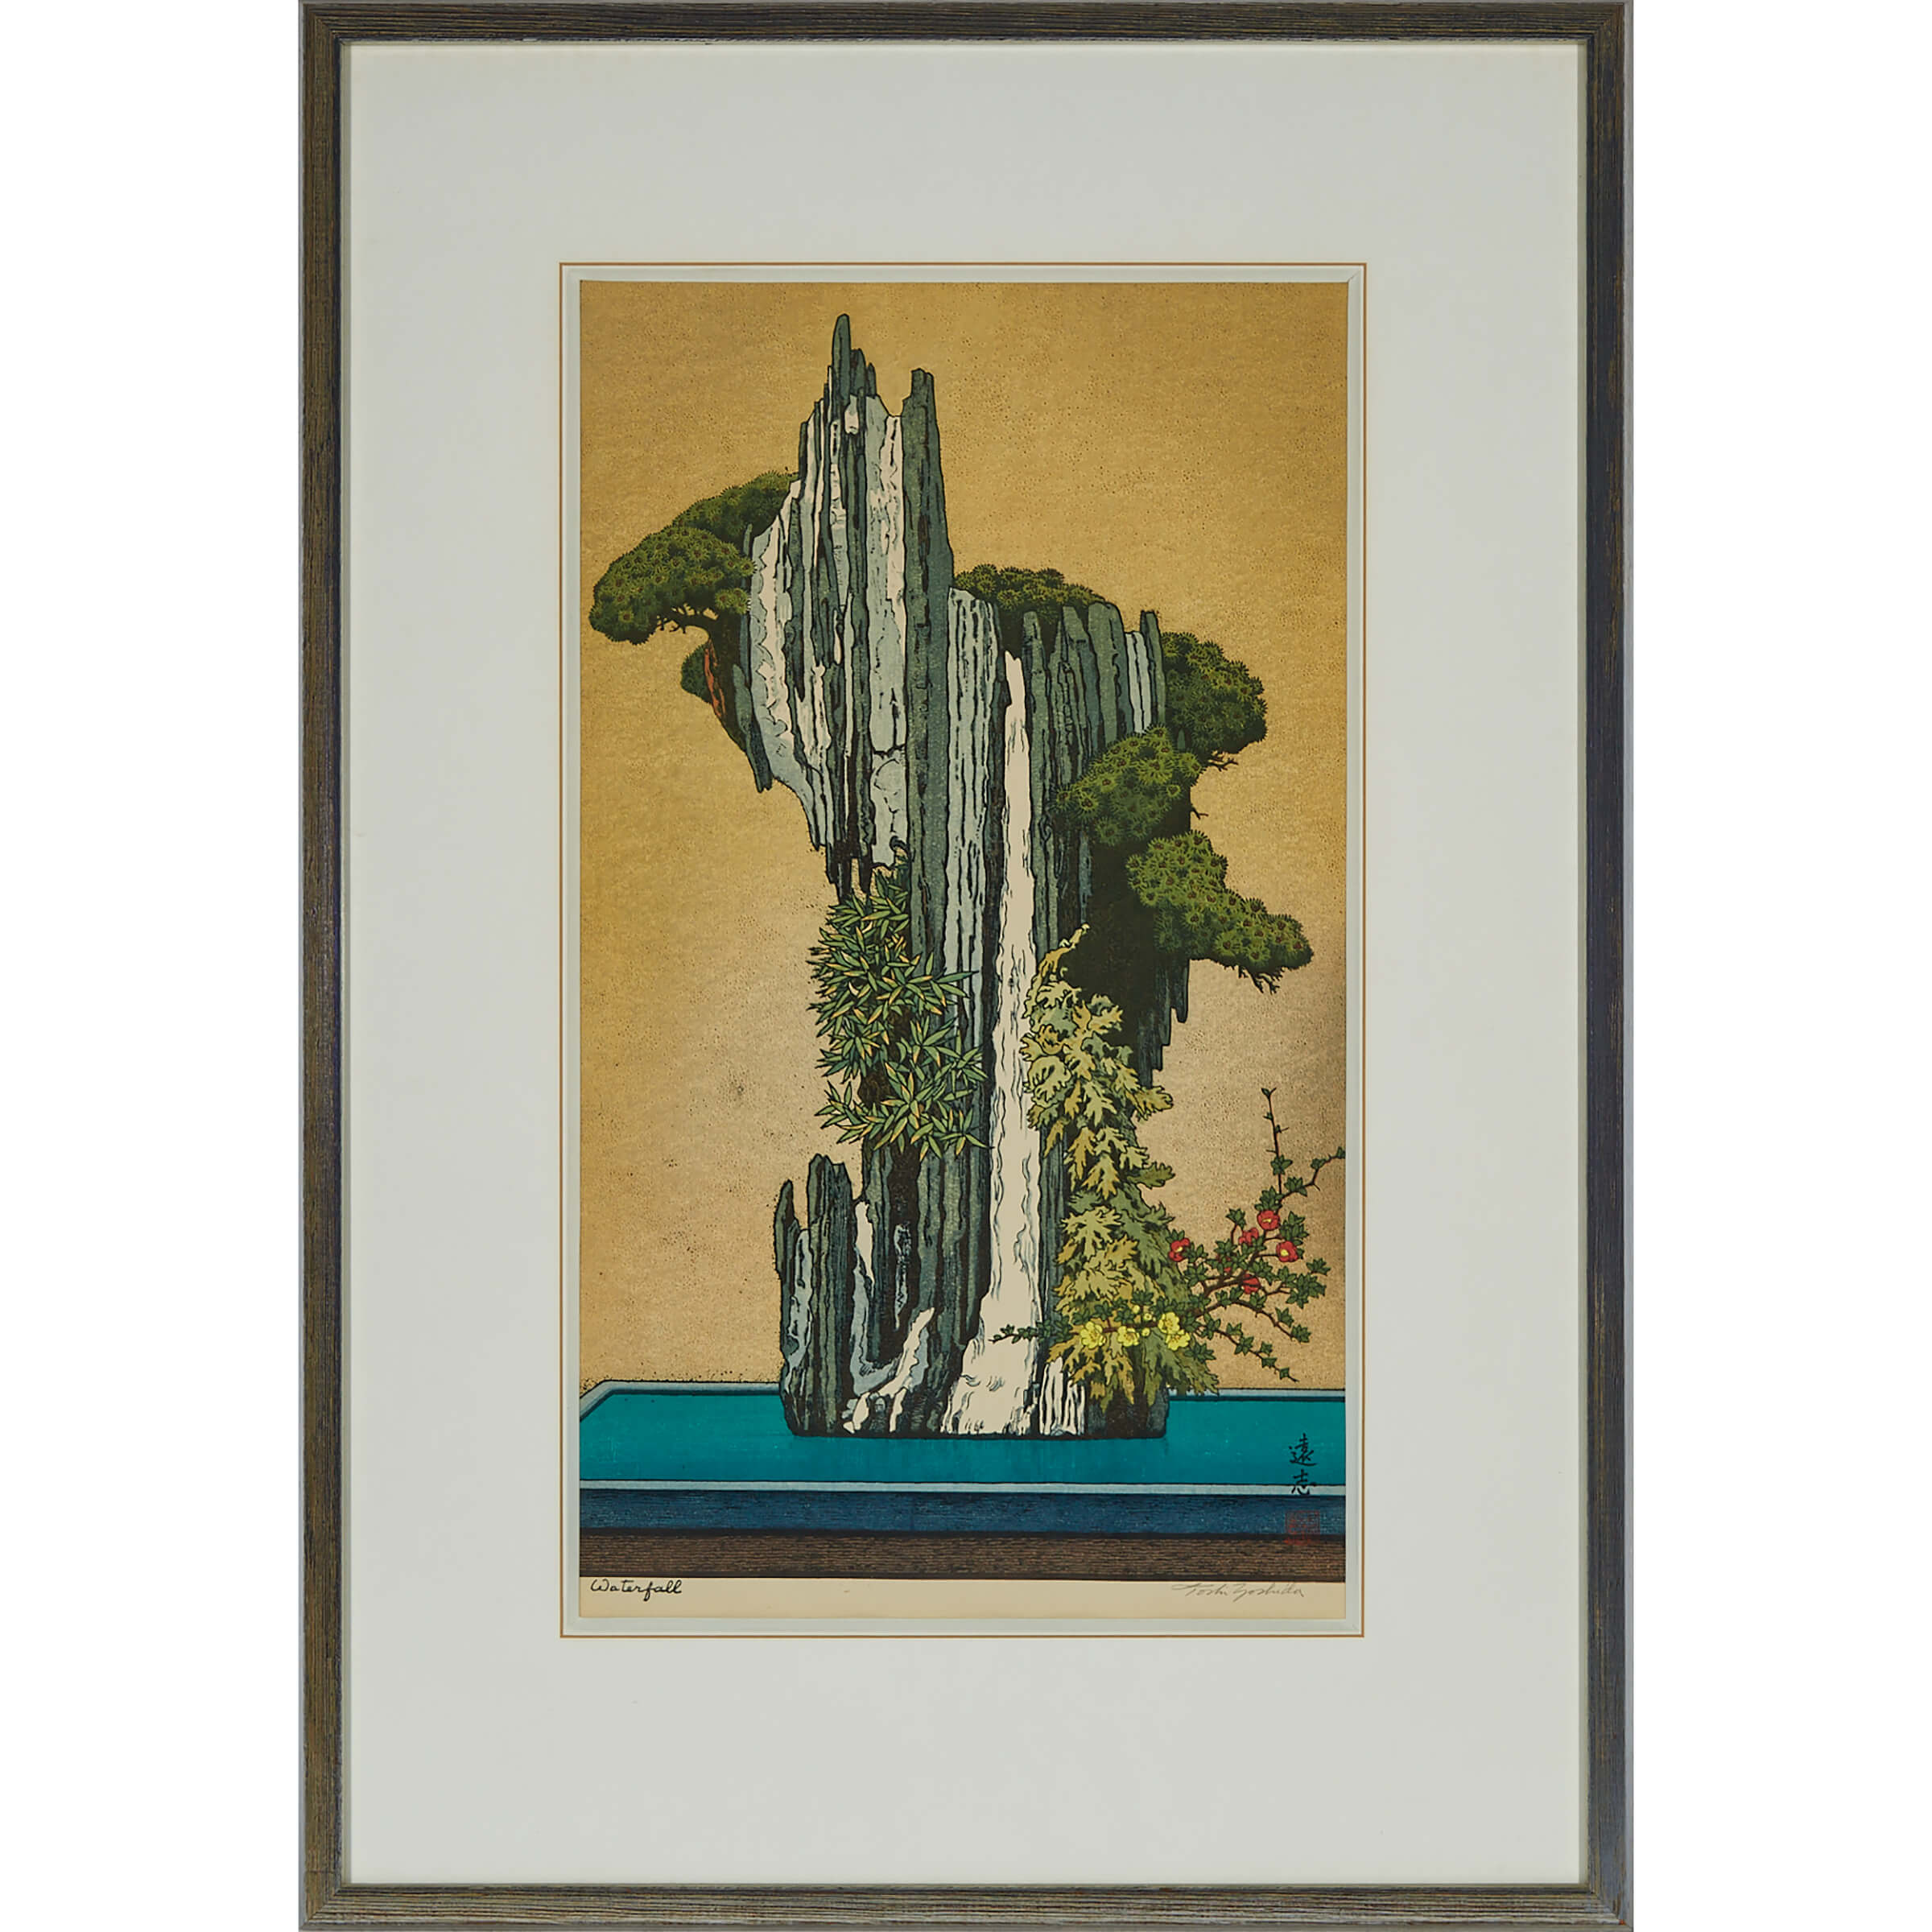 Toshi Yoshida (1911-1995), Waterfall